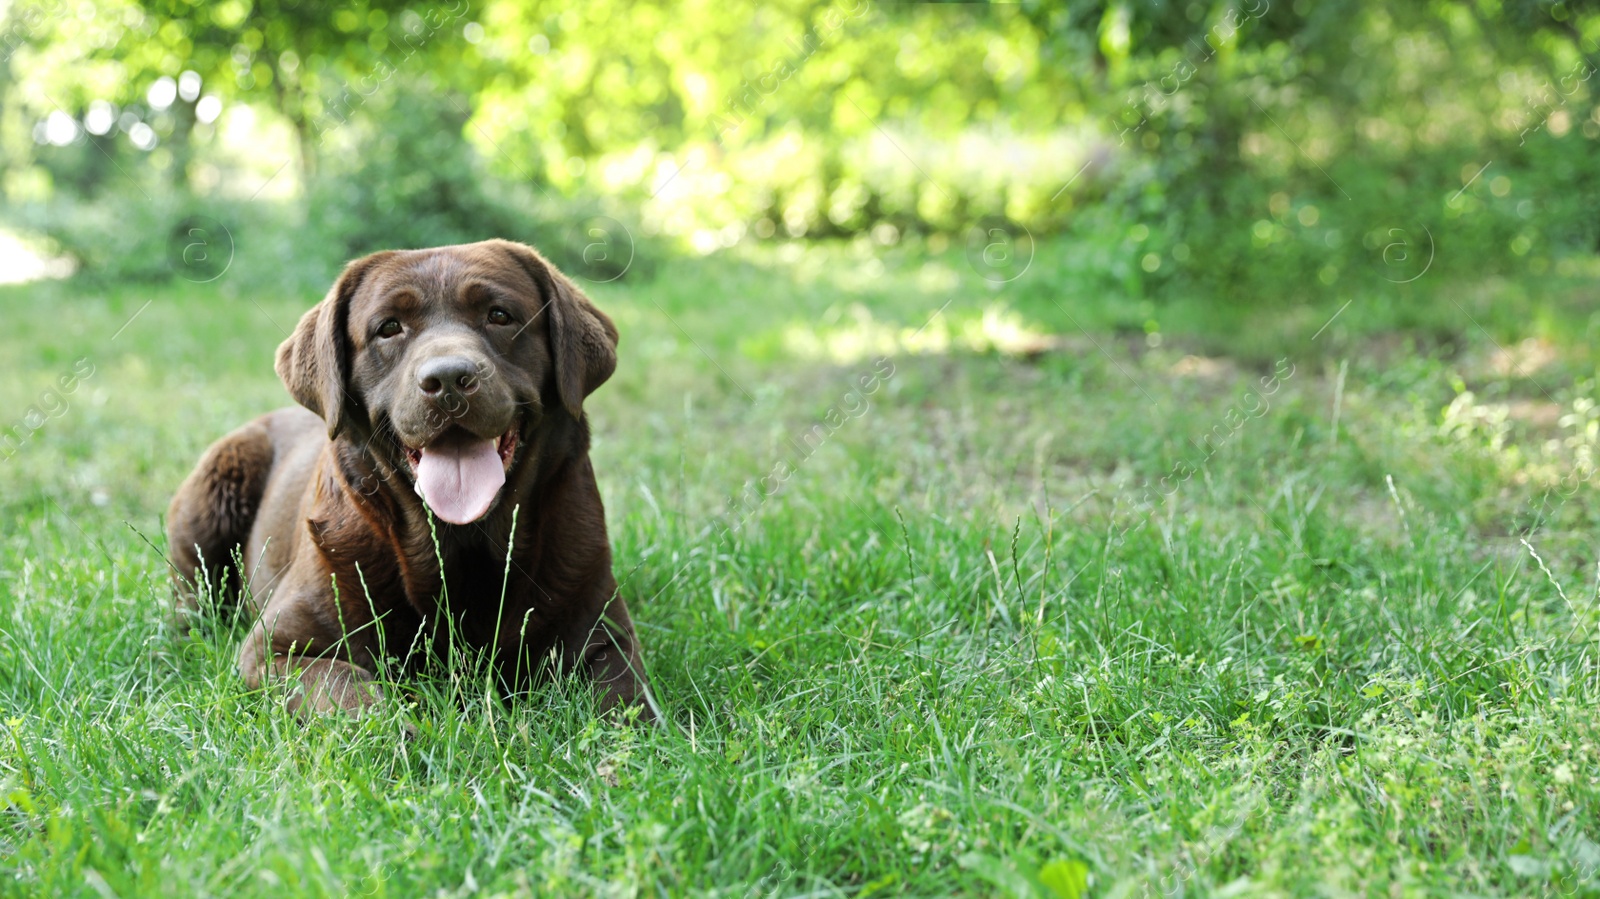 Photo of Cute Chocolate Labrador Retriever on green grass in summer park